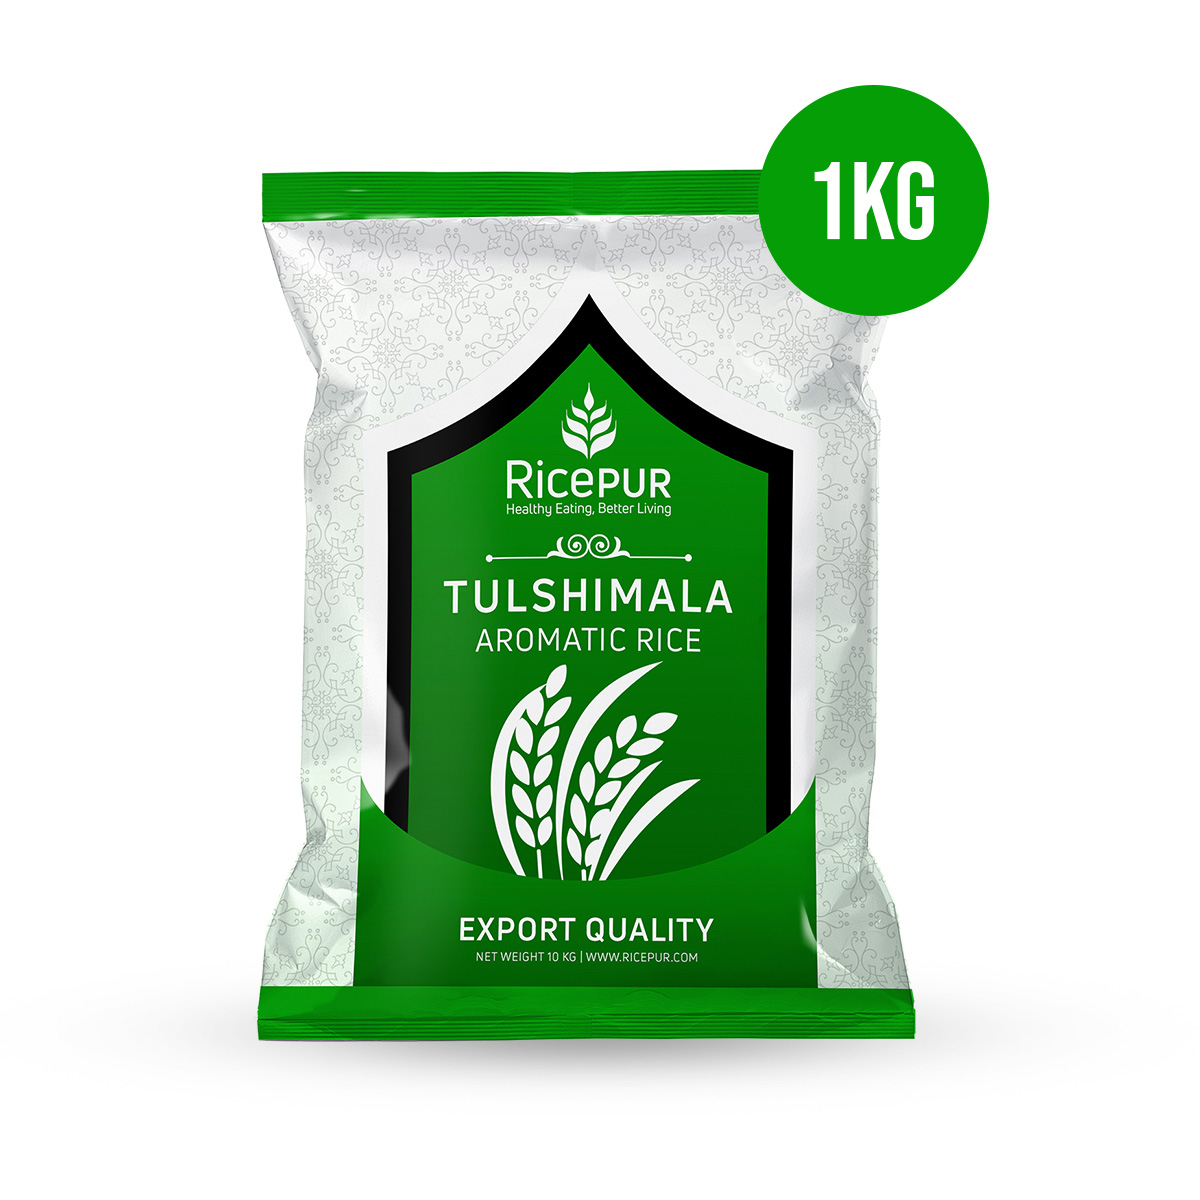 Tulshimala Aromatic Rice 1KG